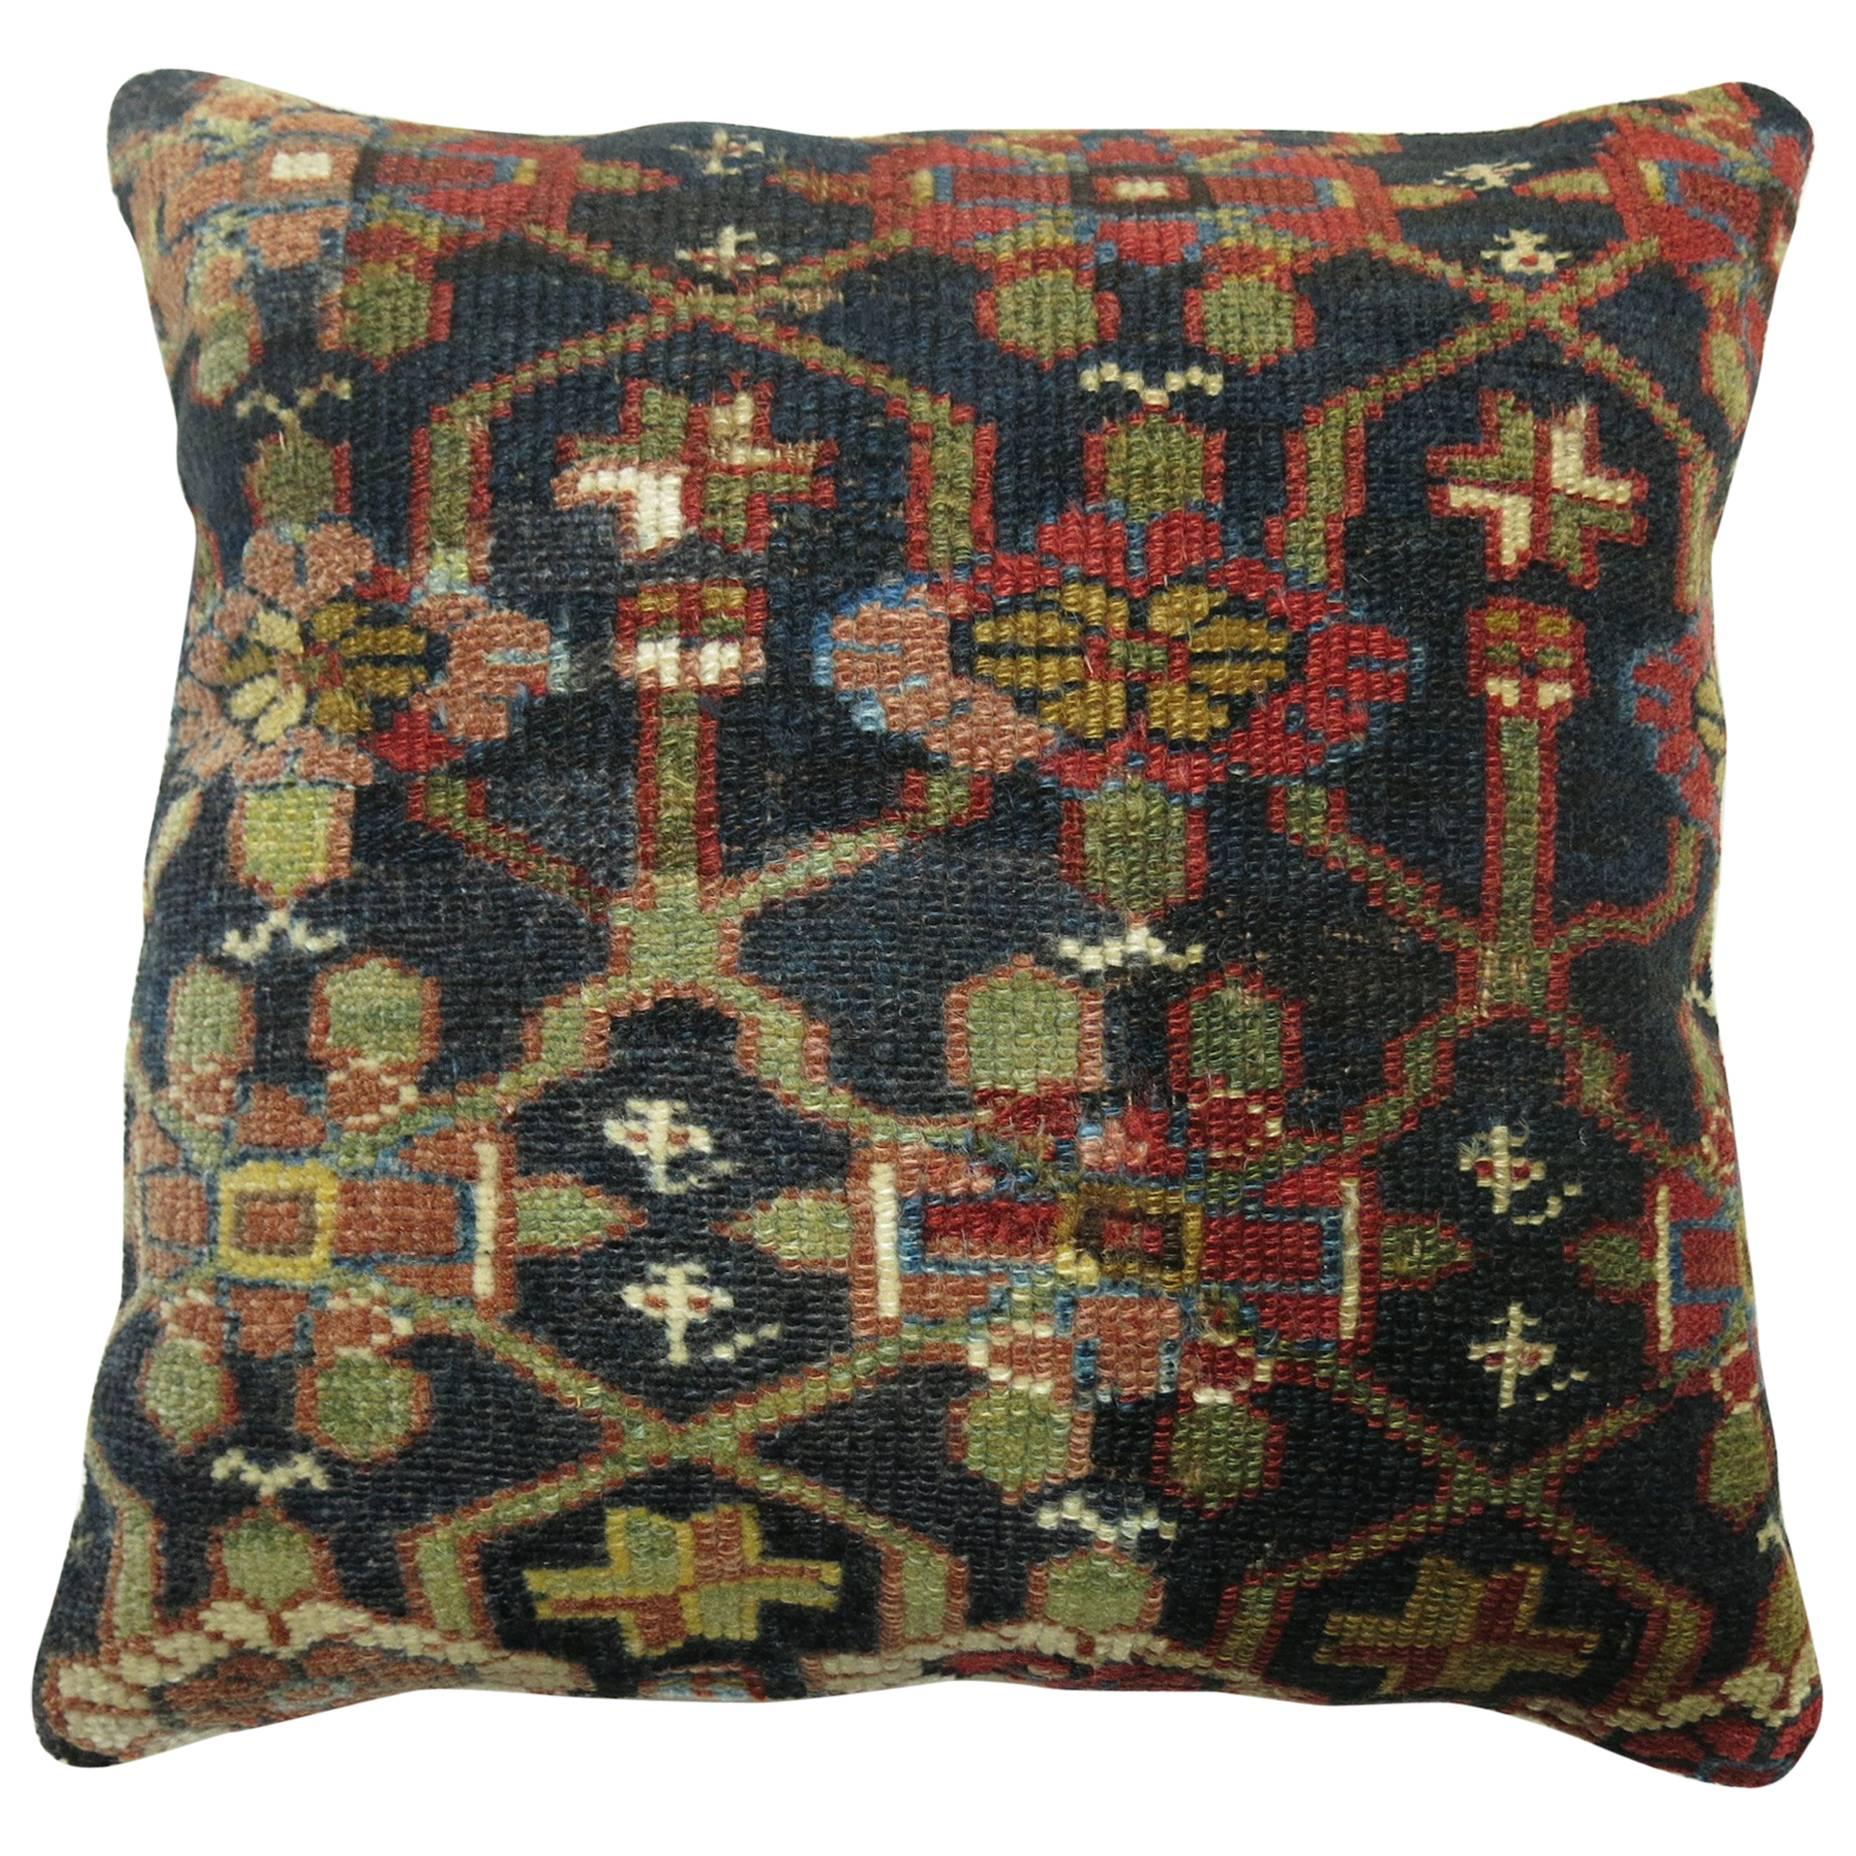 Traditional Persian Rug Pillow